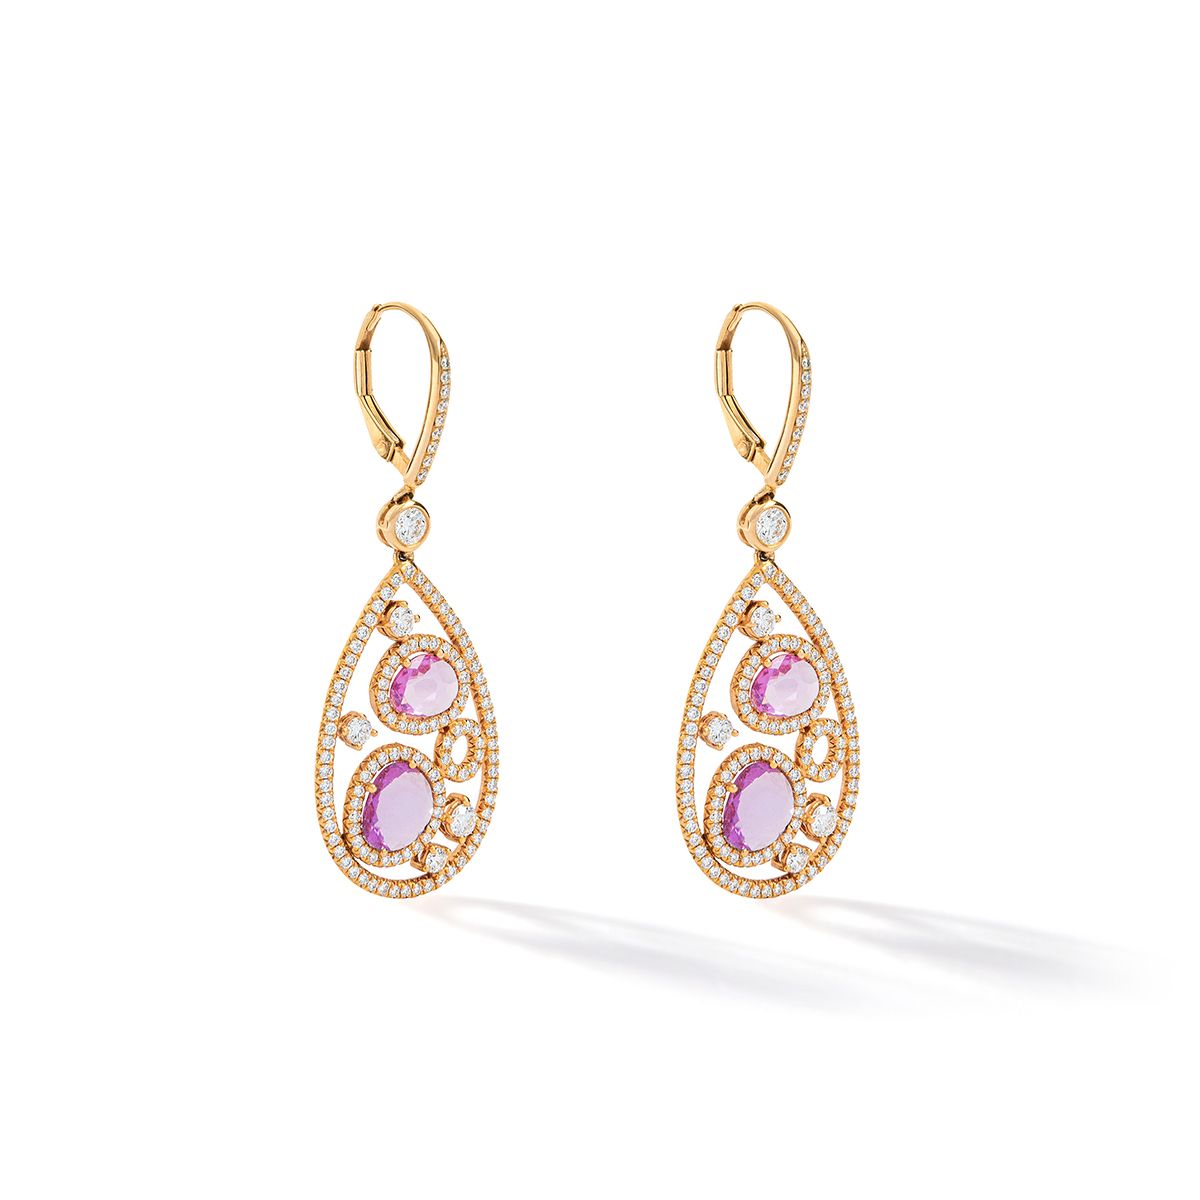 Null 18K黄金和钻石镶嵌粉色蓝宝石和紫水晶的吊坠耳环

尺寸：45 x 17 mm

毛重：7.80克